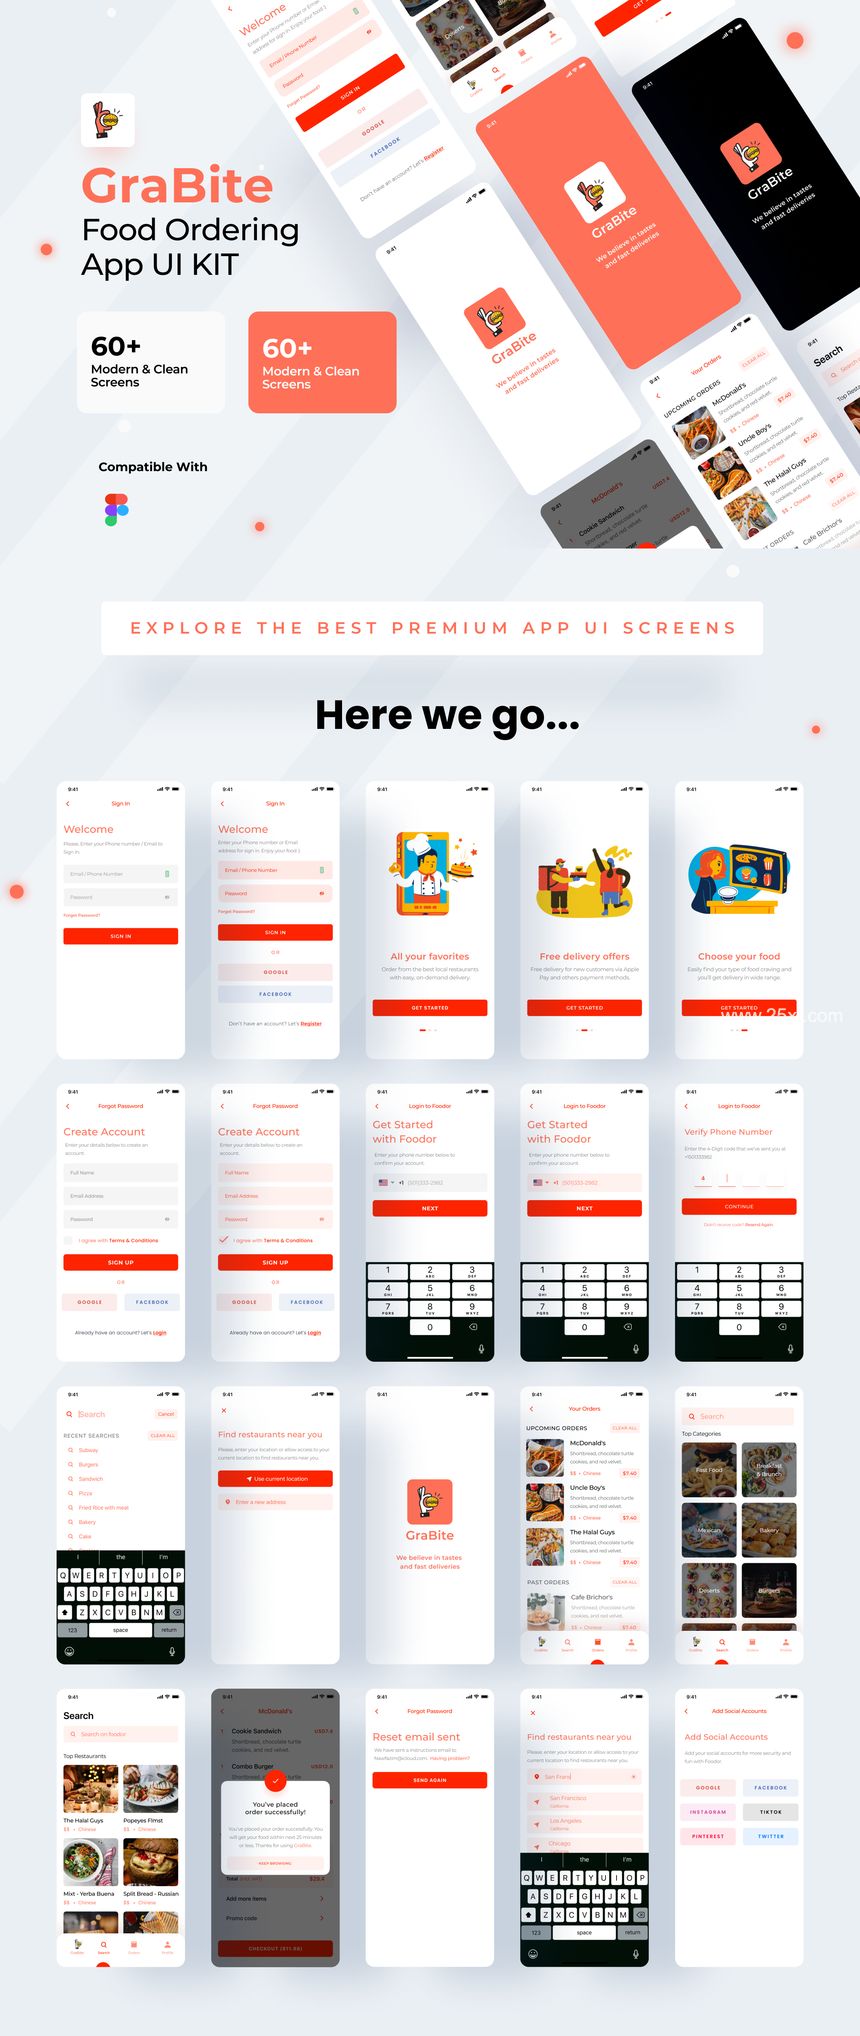 25xt-487527-GraBite - A Food Order & Delivery App UI Kit8.jpg